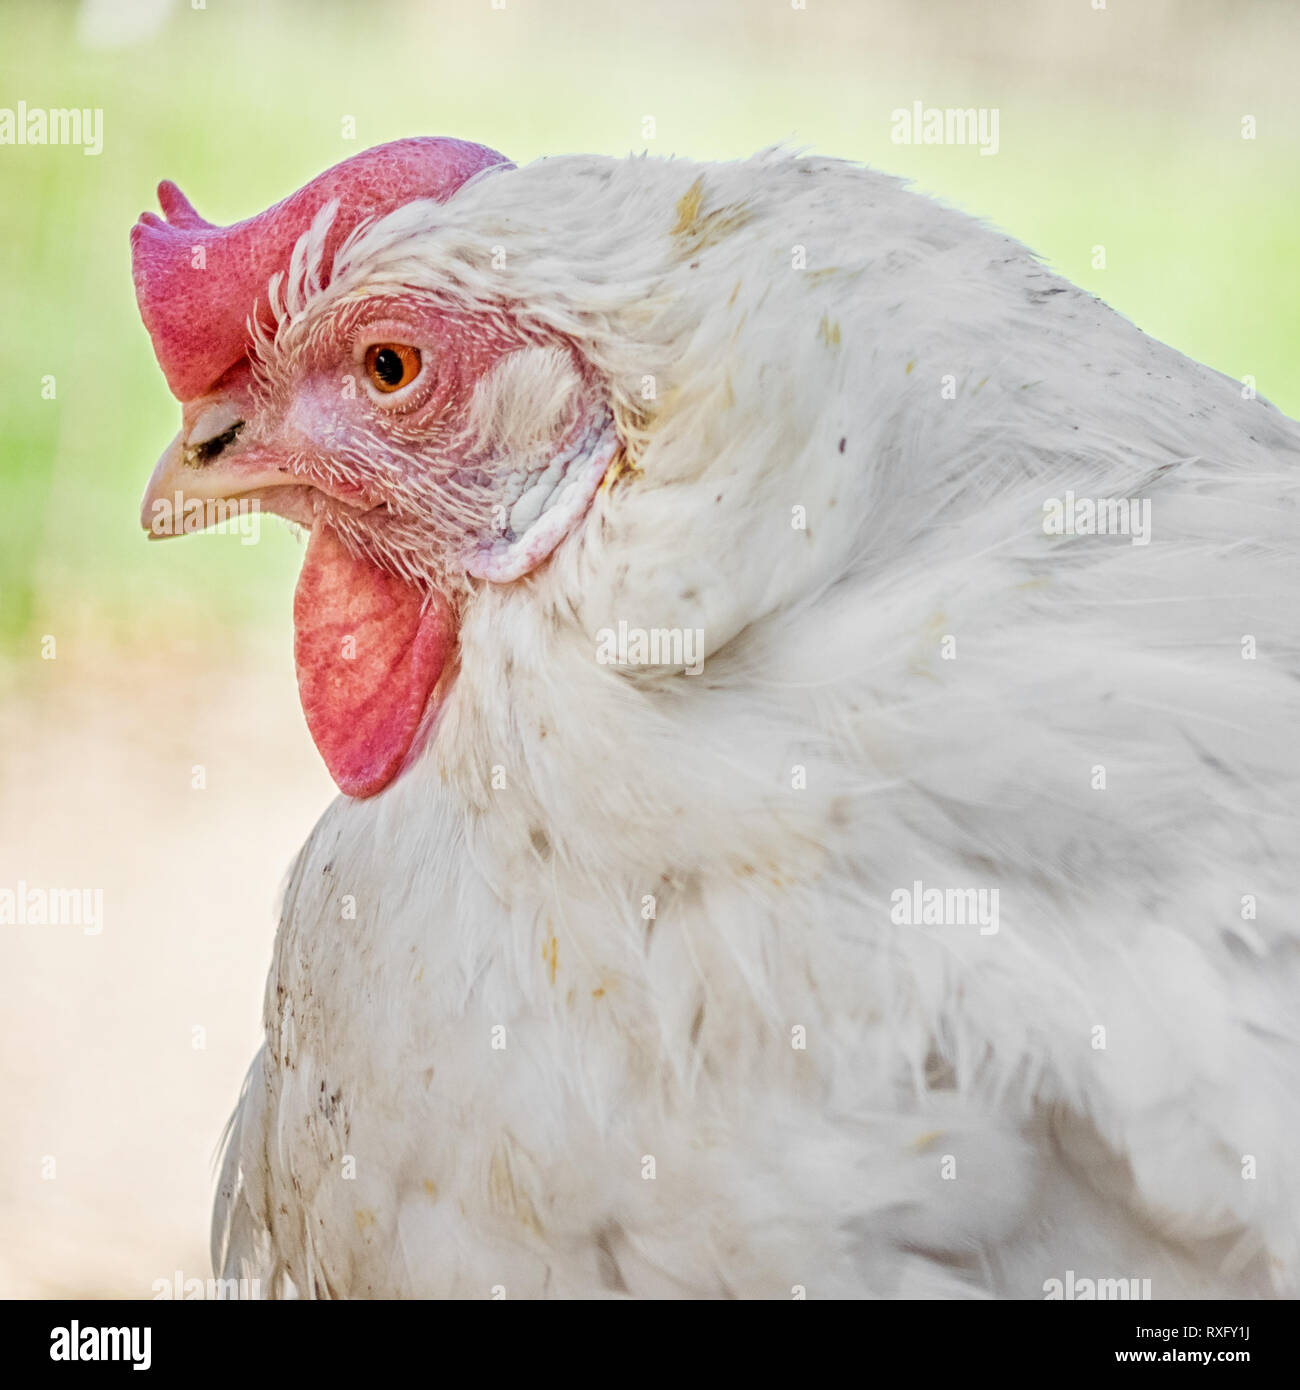 Hühner Portrait - Fotofrafie mit Altglas - Carl Zeiss Jena 50mm 2.8 Stock Photo